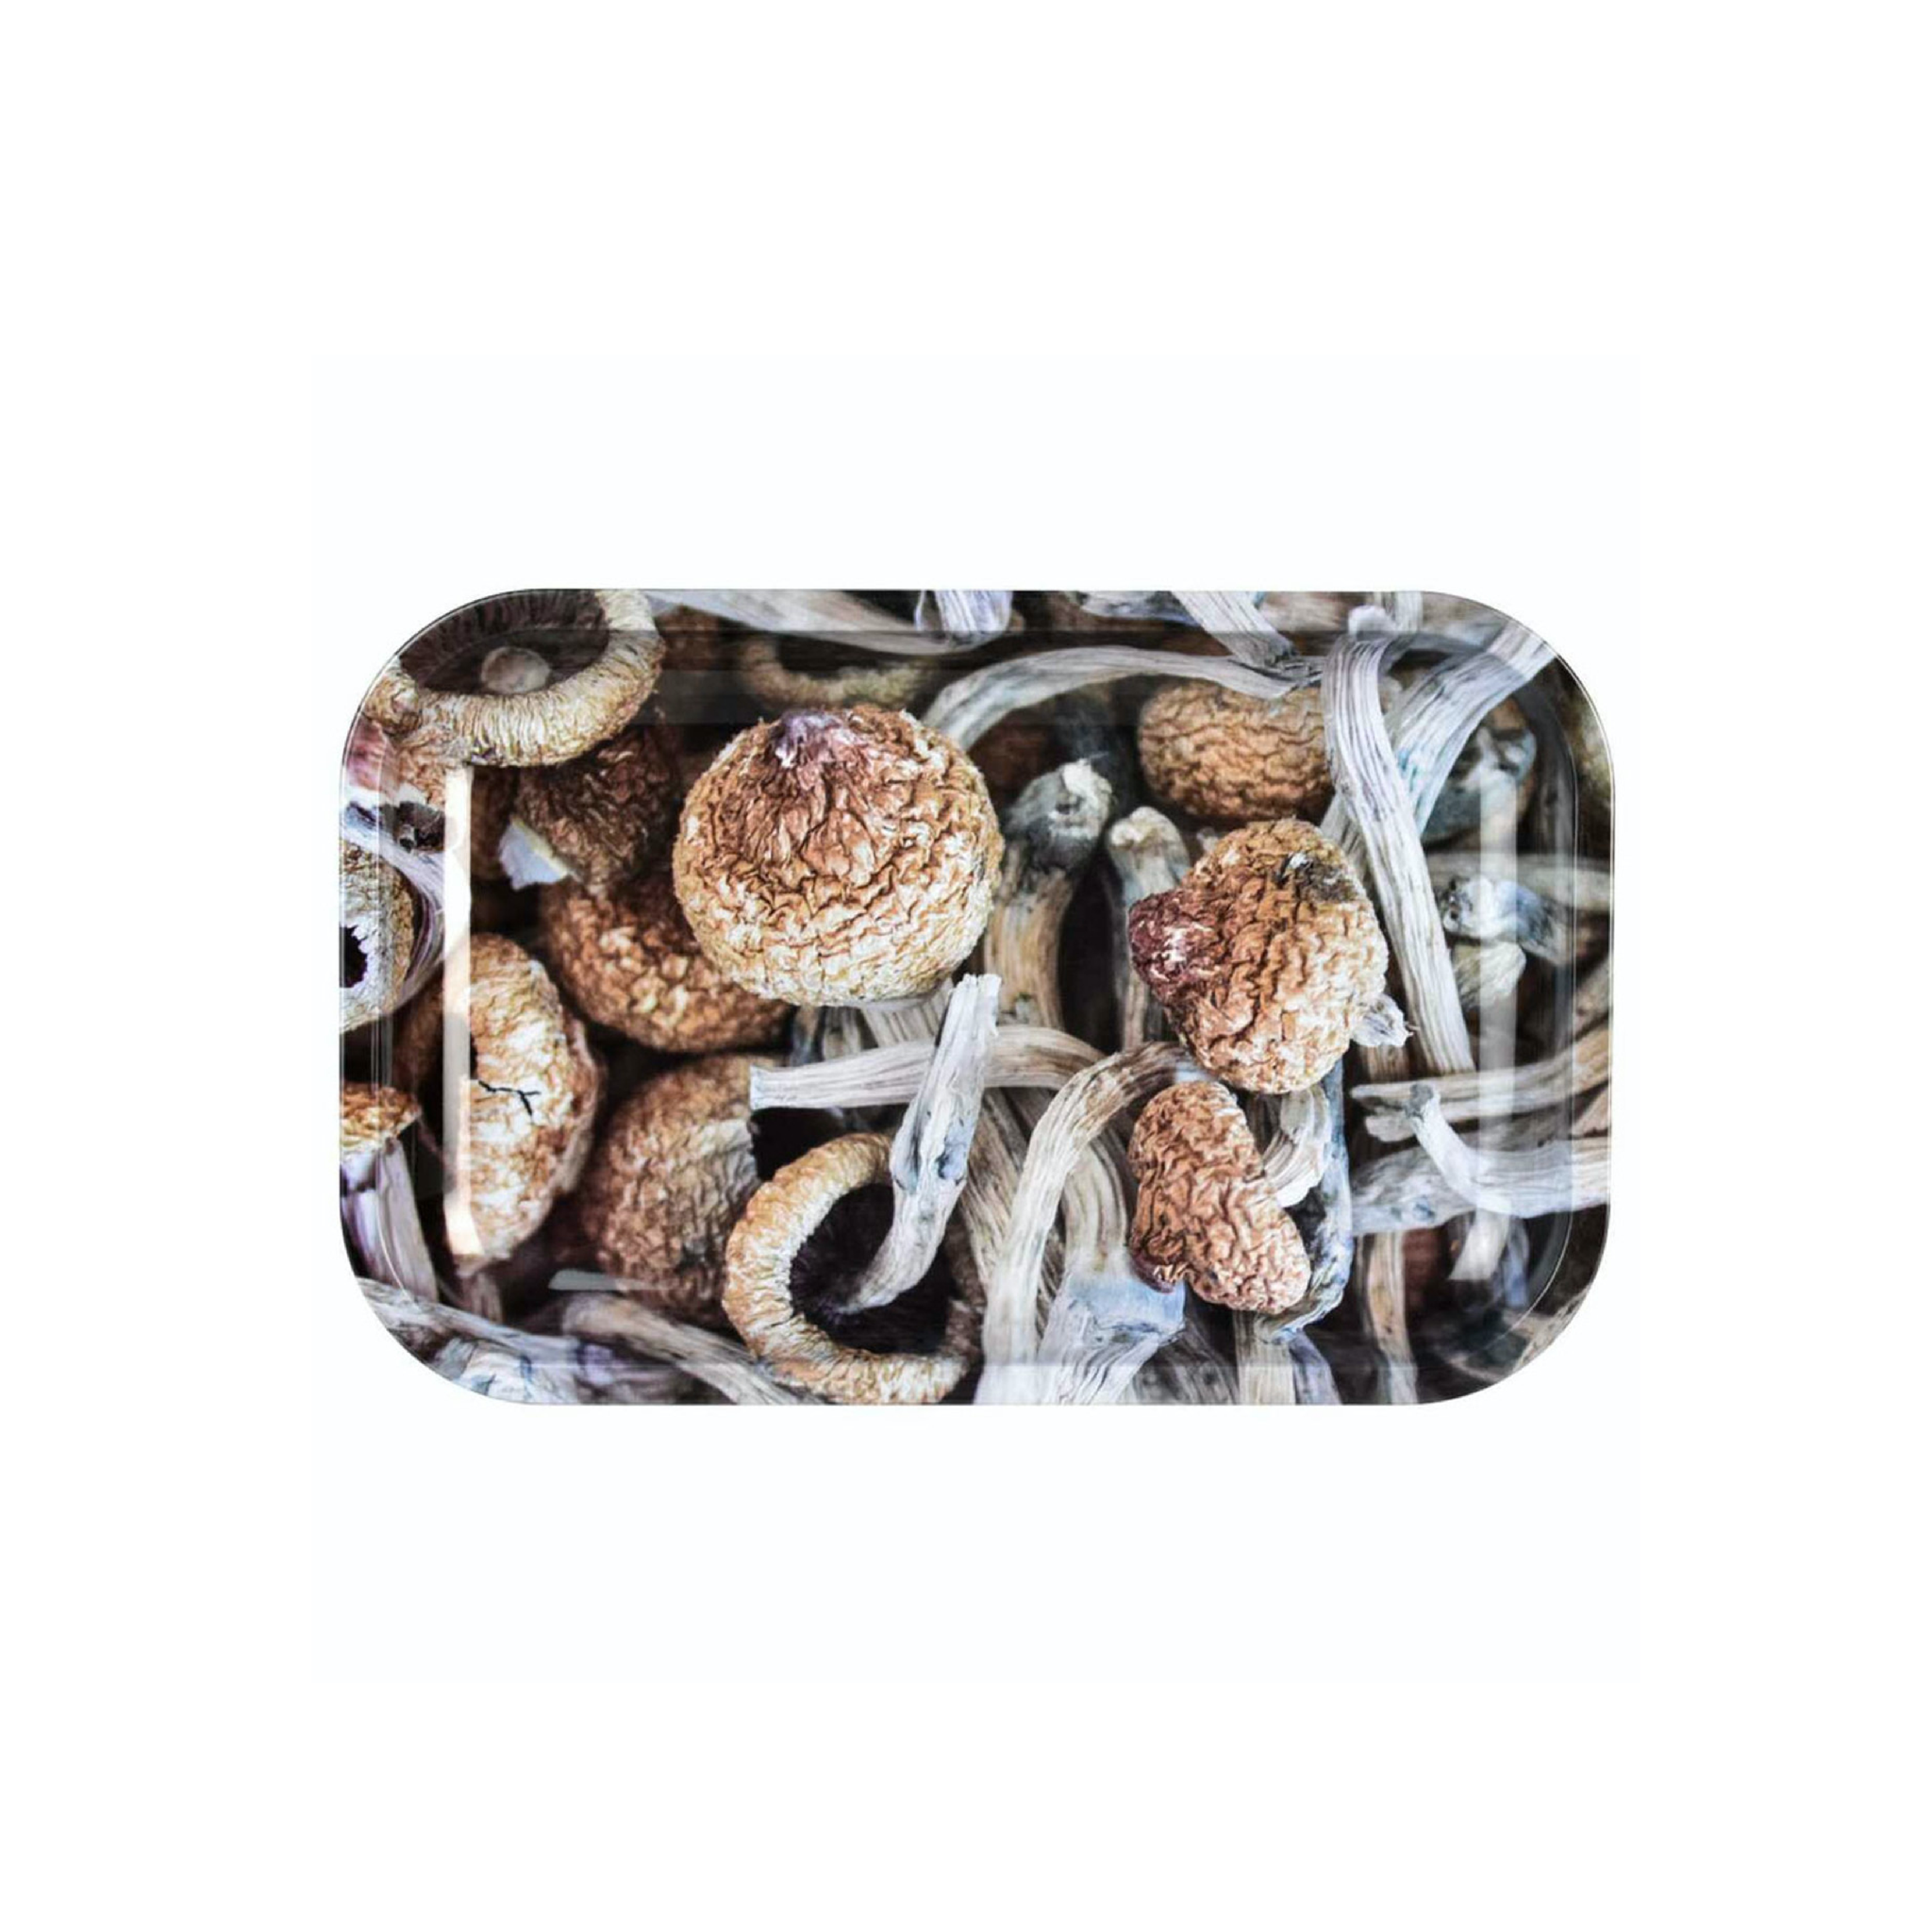 Mushroom Rolling Tray